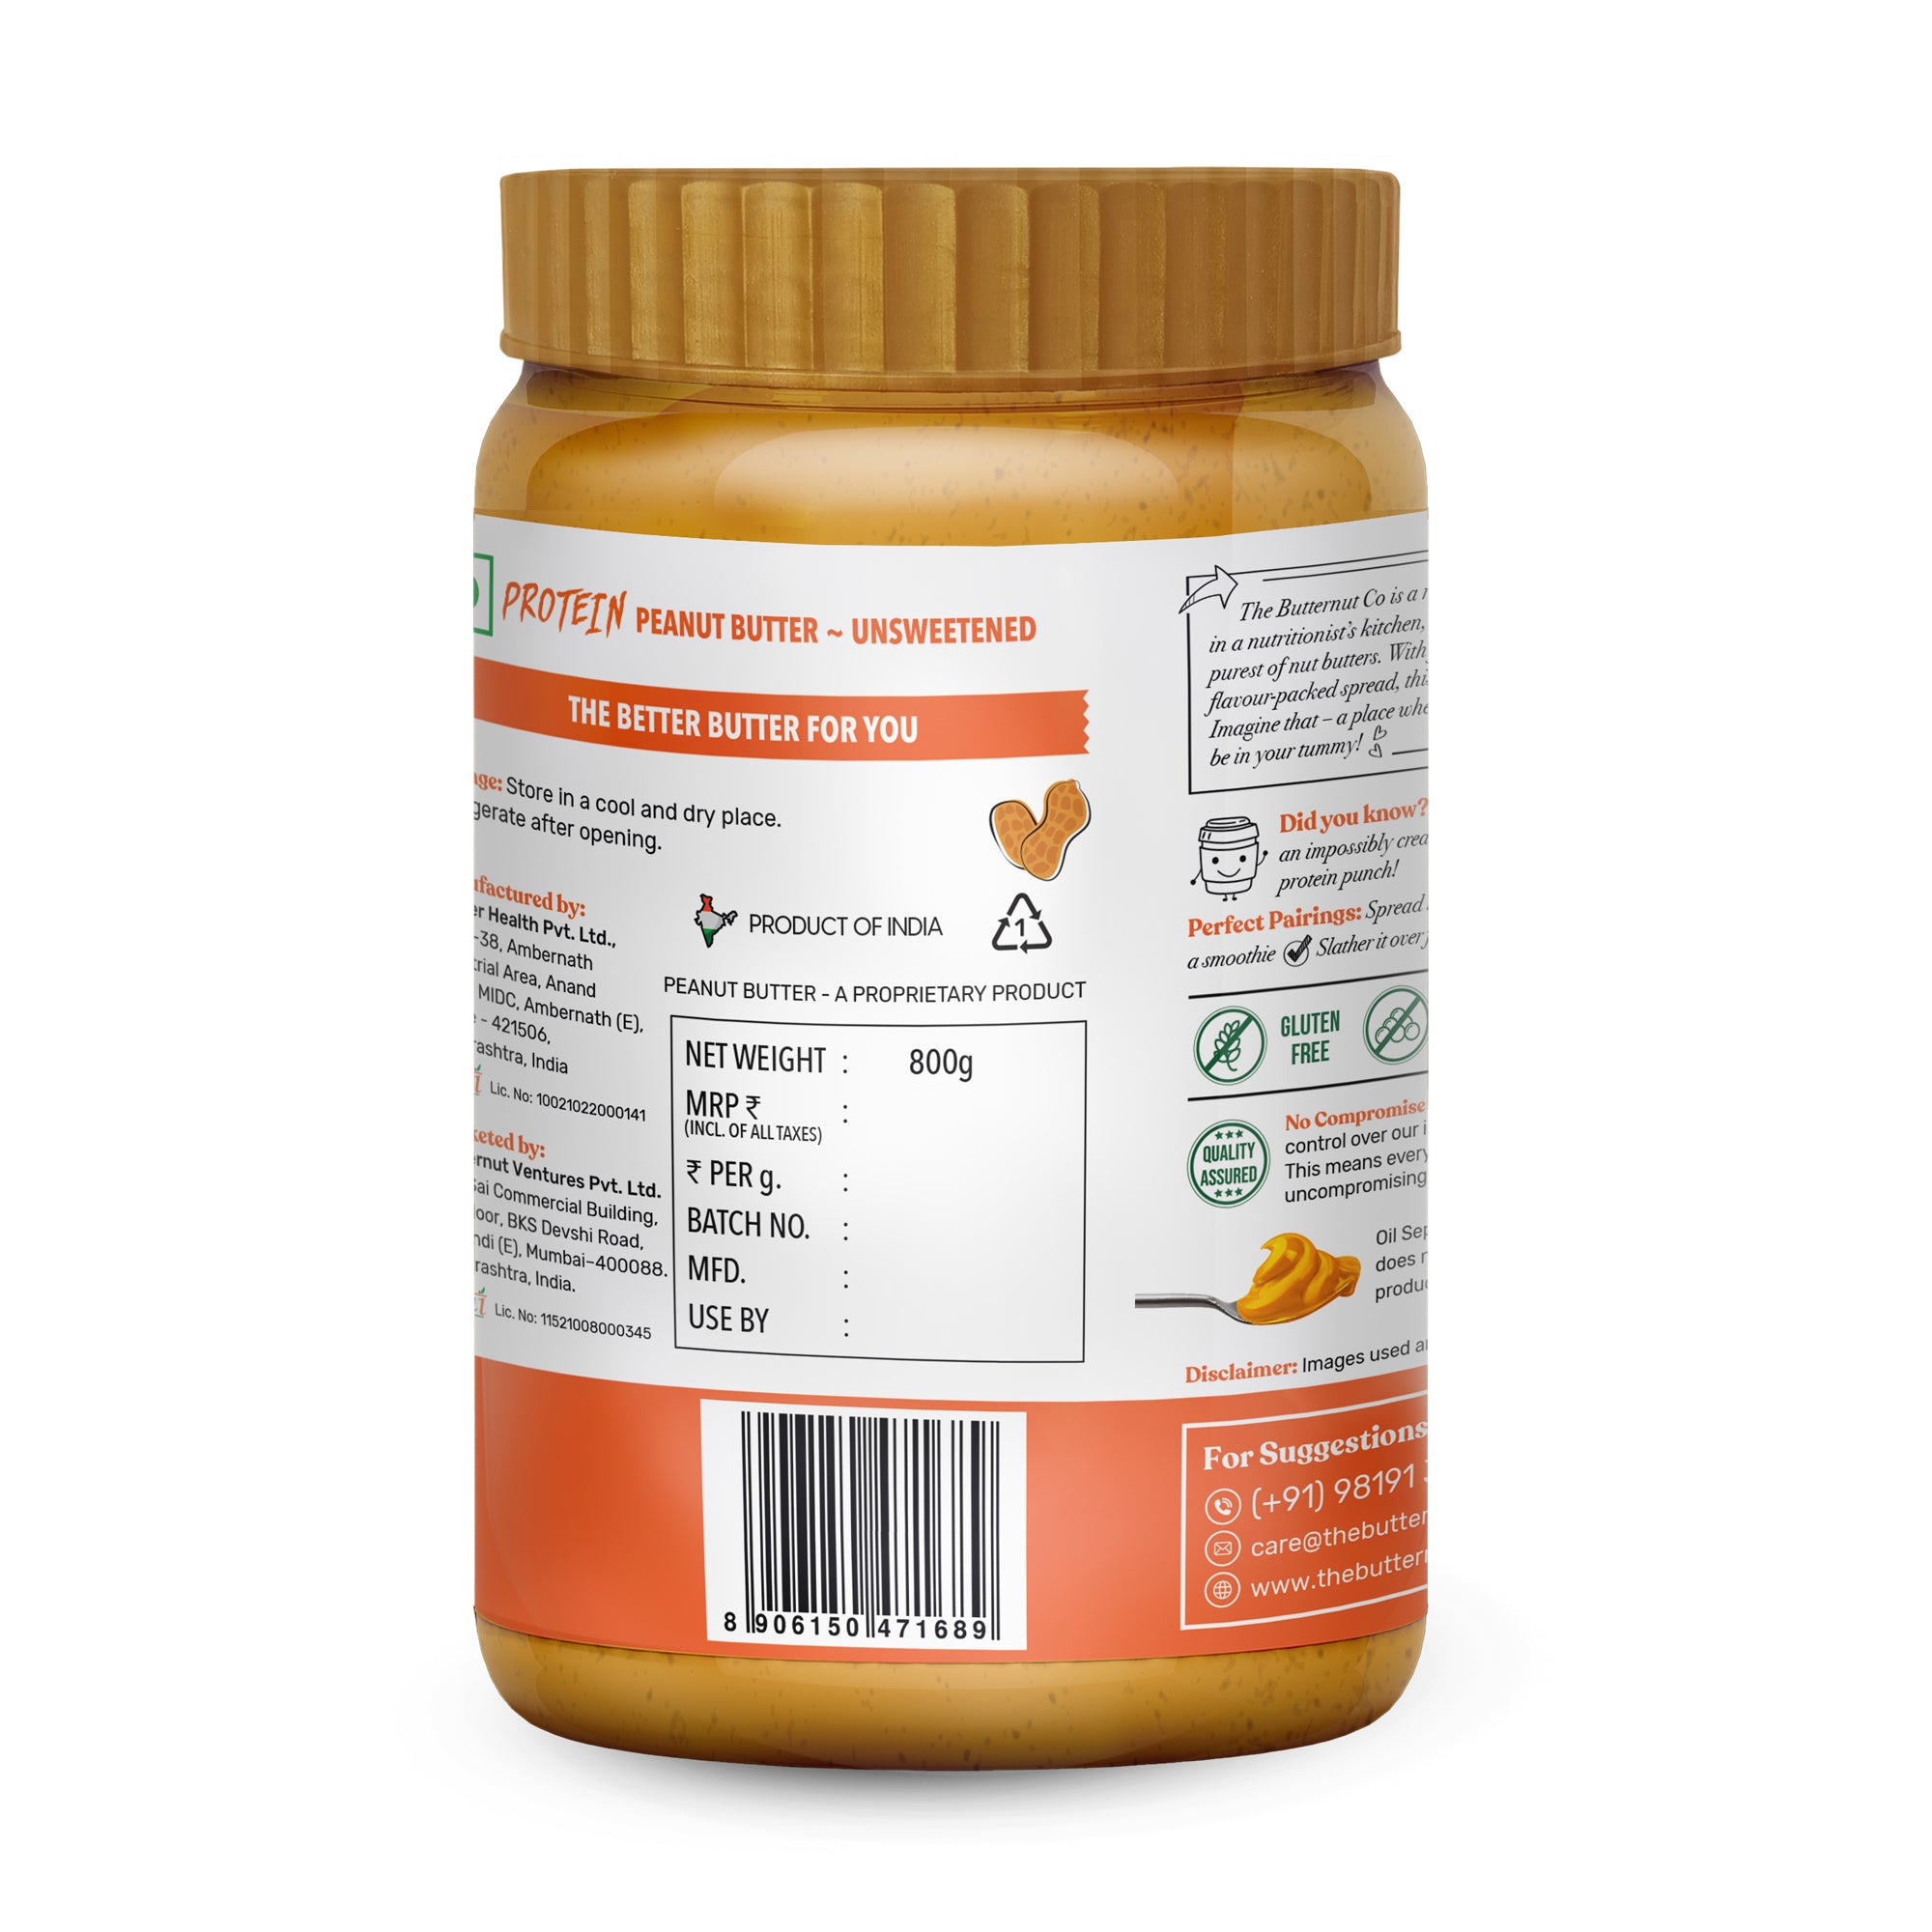 The Butternut Co. Protein Unsweetened Peanut Butter